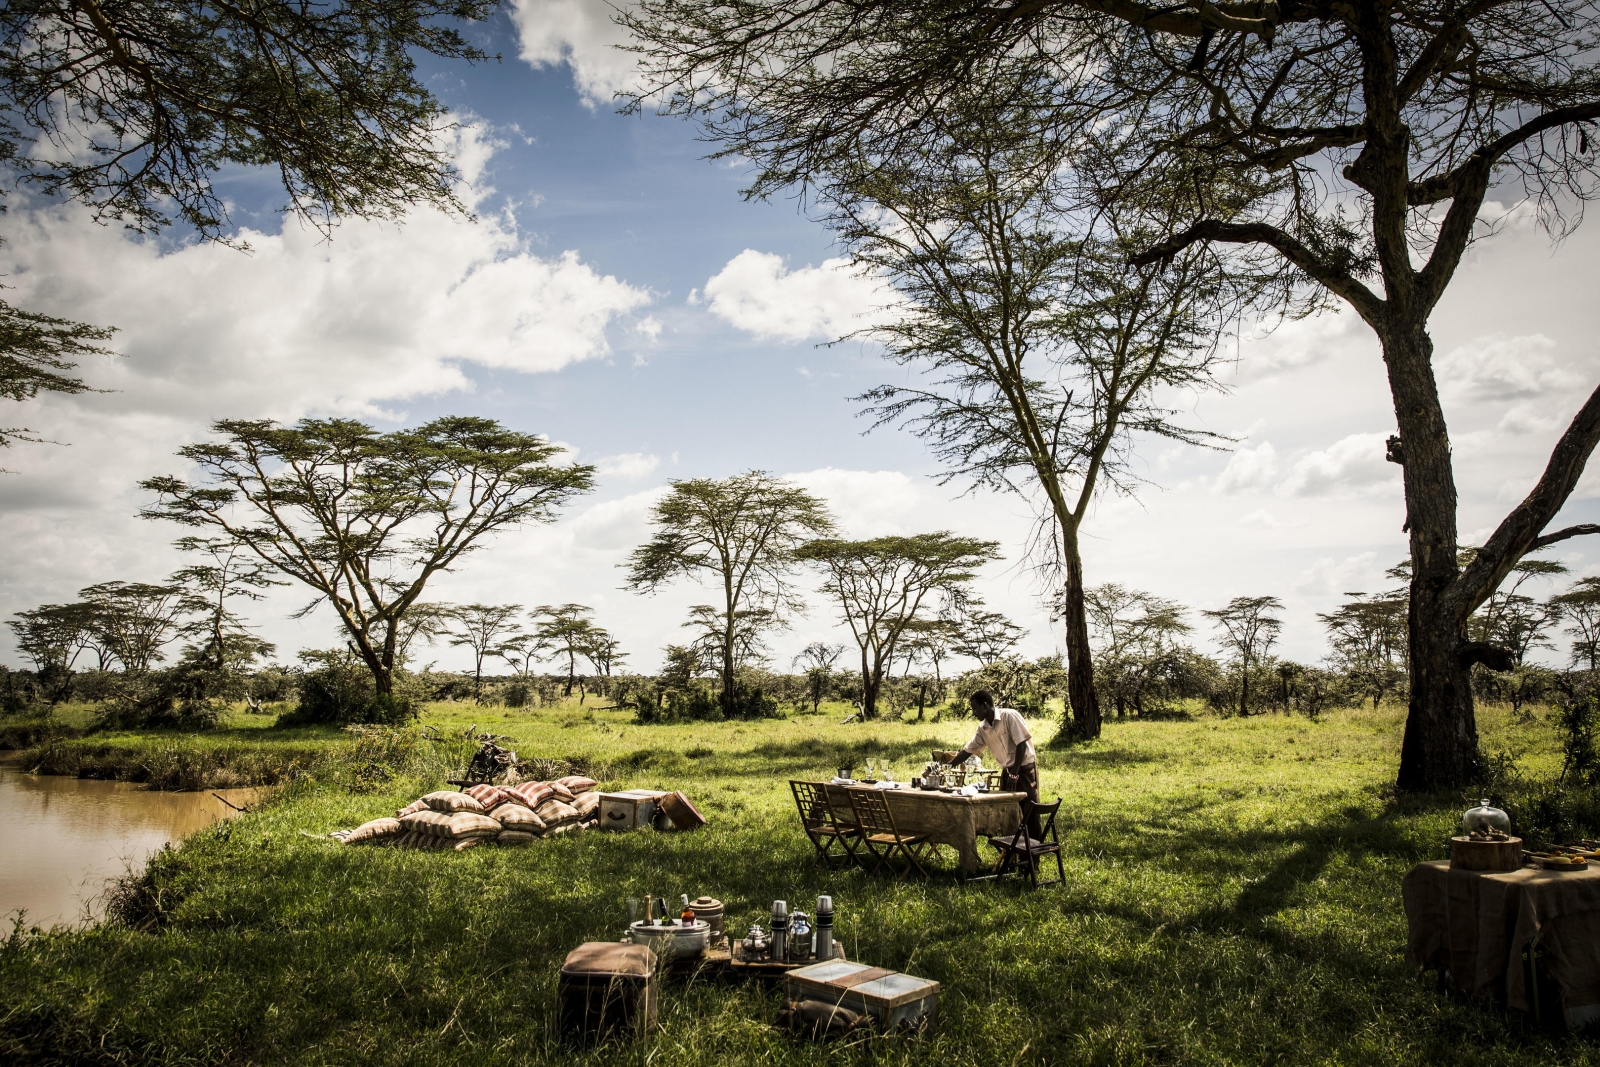 Picnic by a watering hole at luxury safari lodge Segera in Kenya 